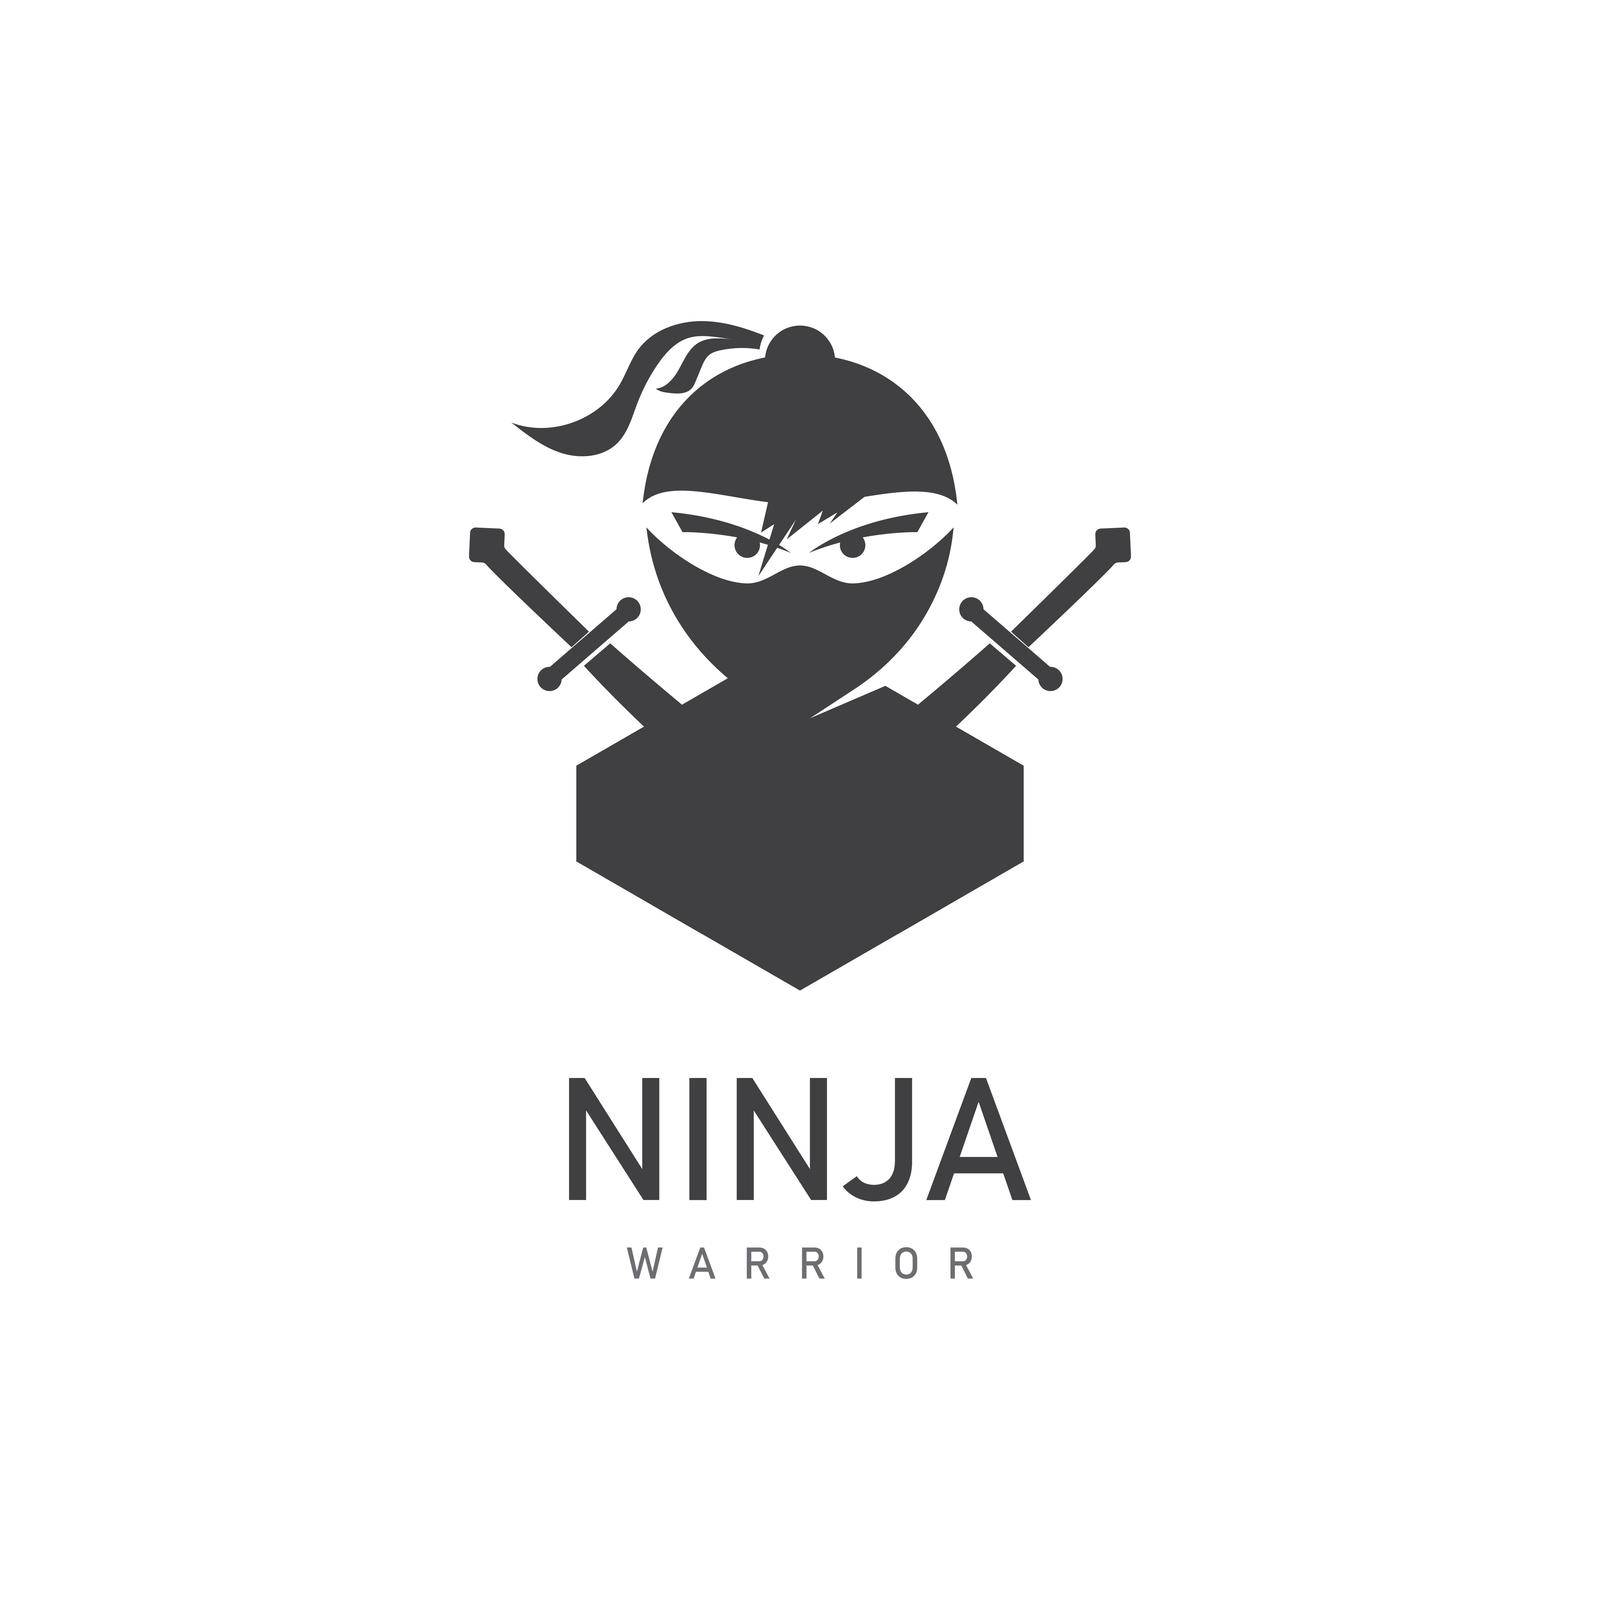 Ninja illustration by awk